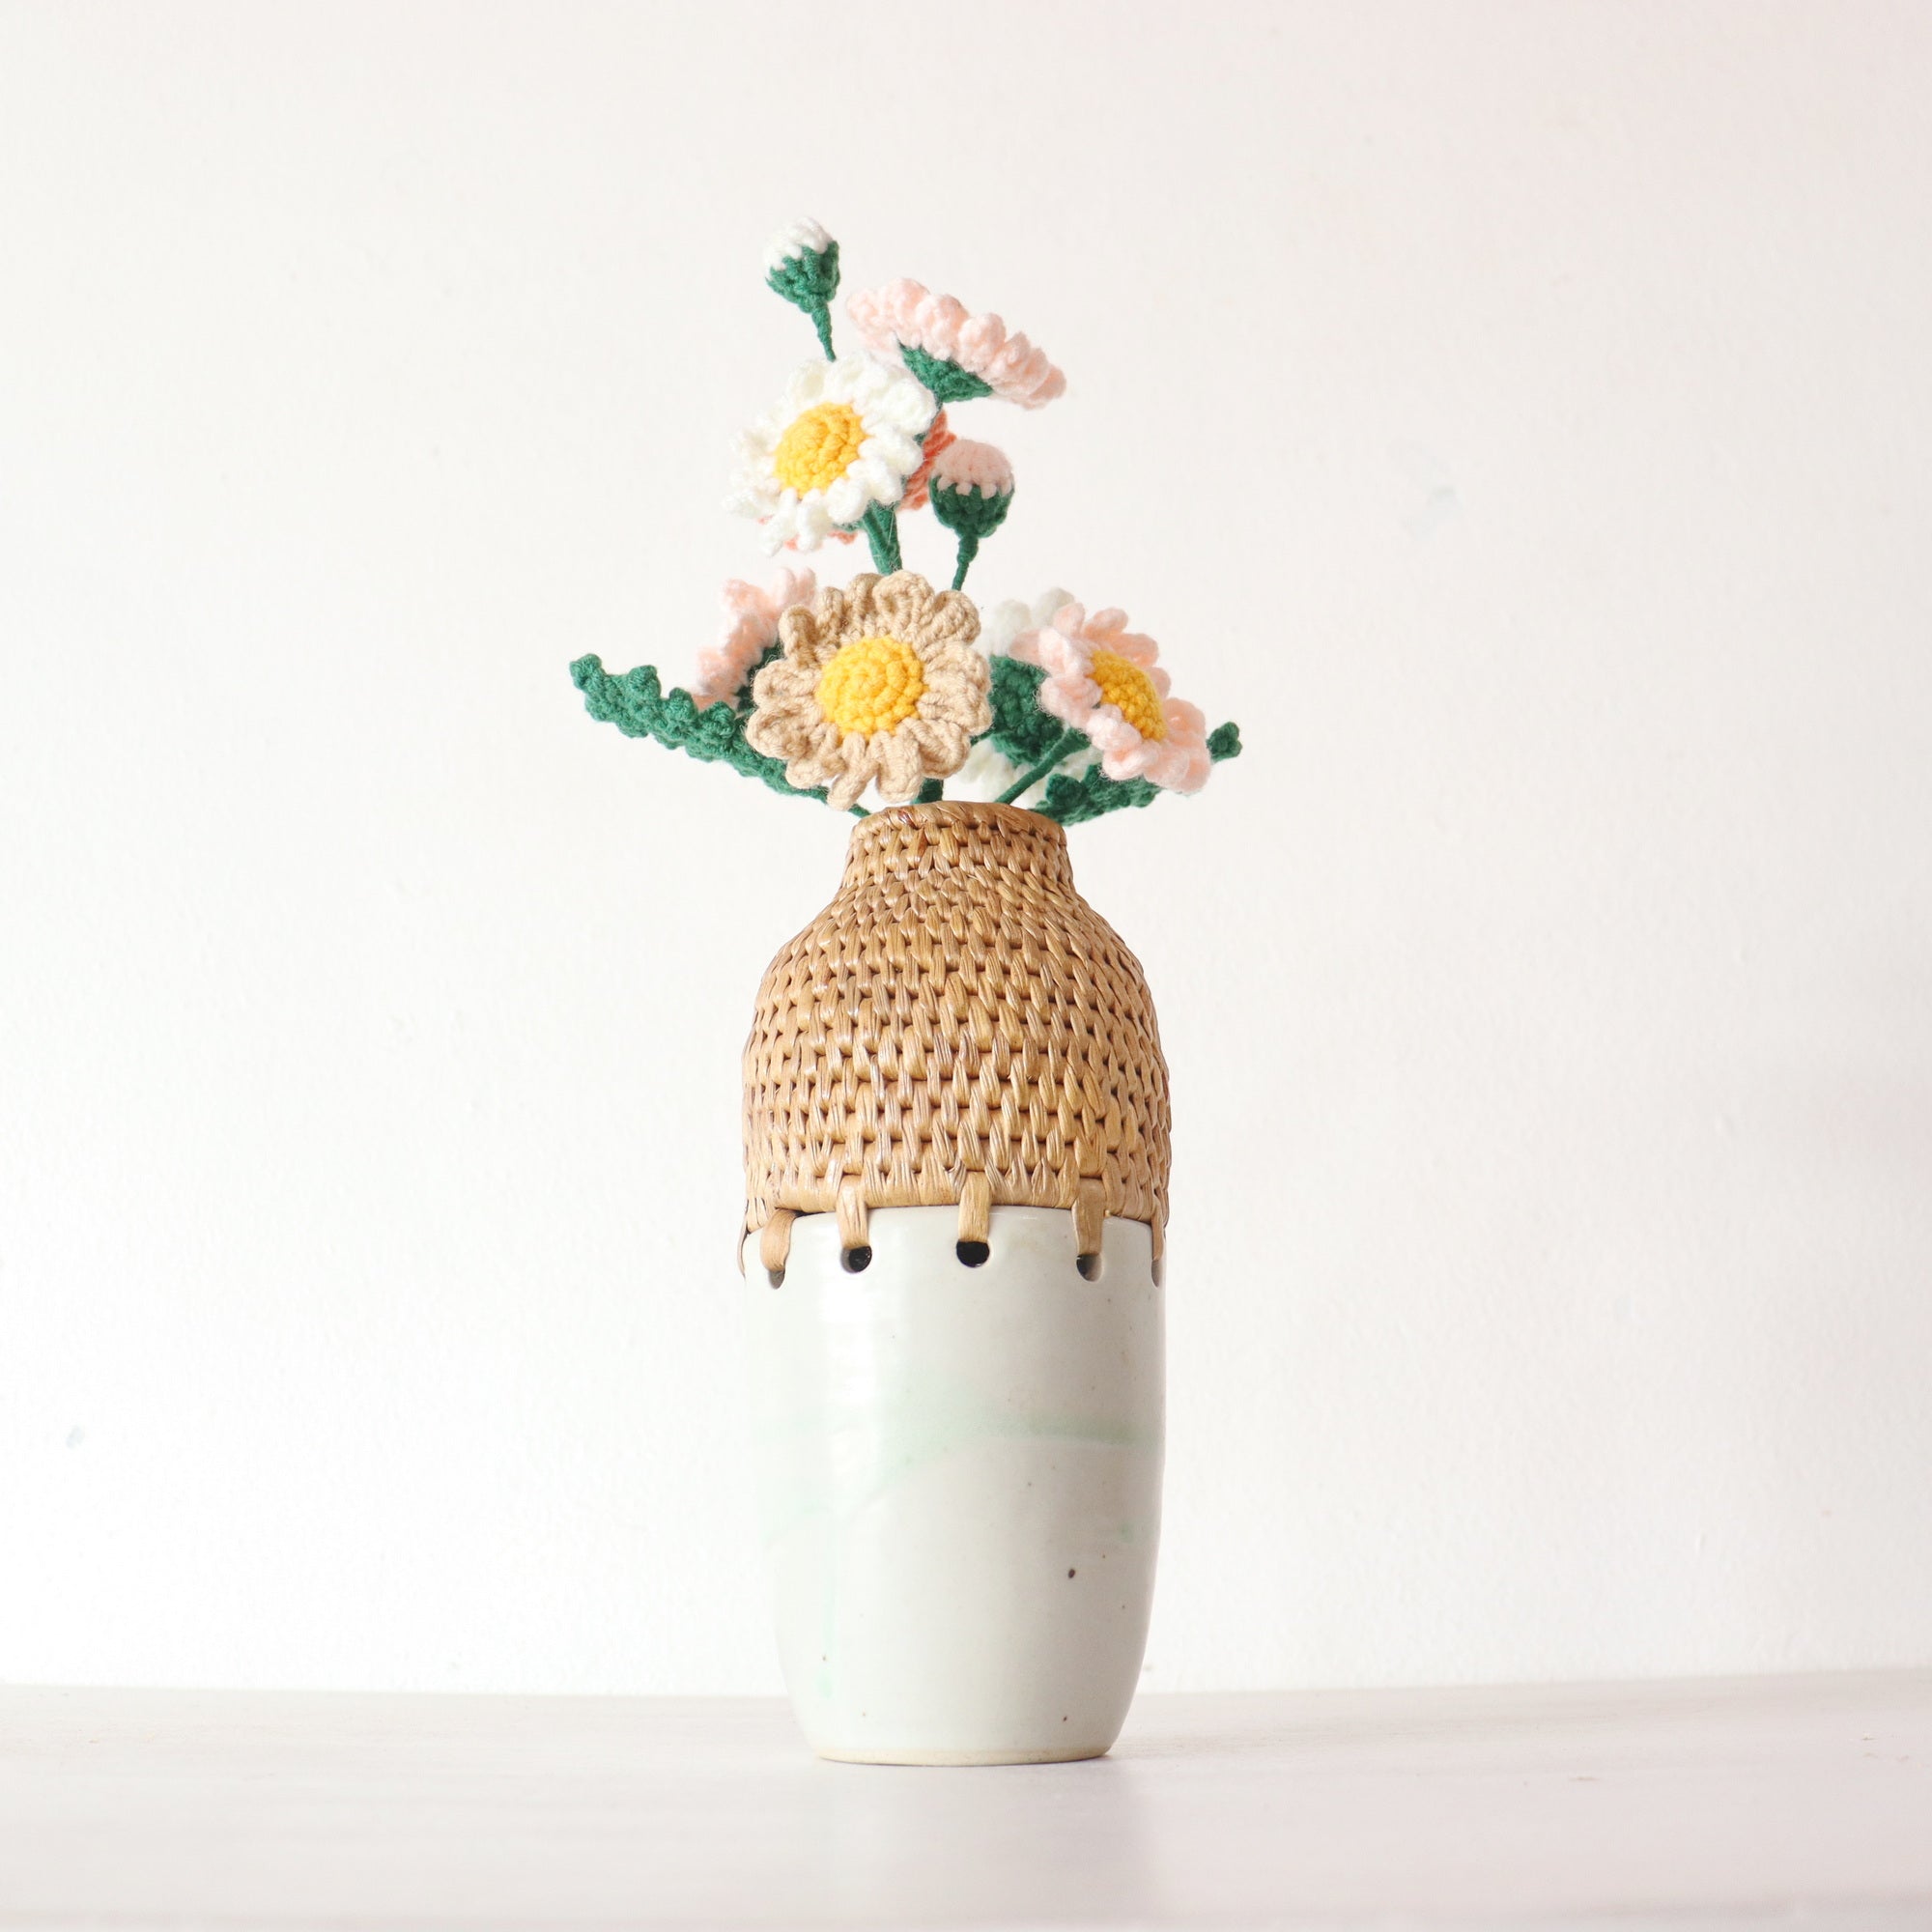 RA NI - Ceramic and Hand woven seagrass Vase